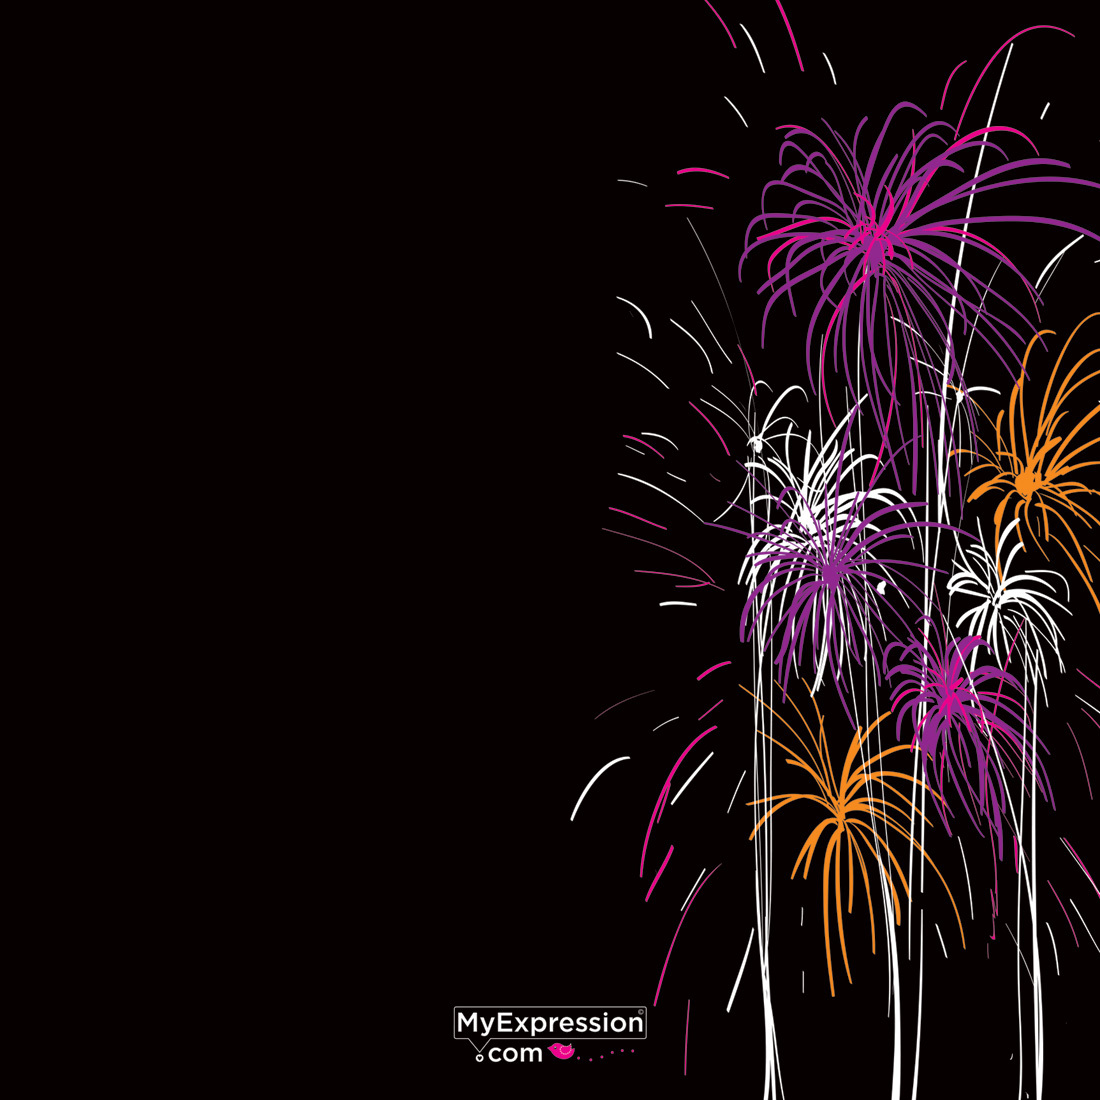 Sparkling Festive Fireworks Event Invitations